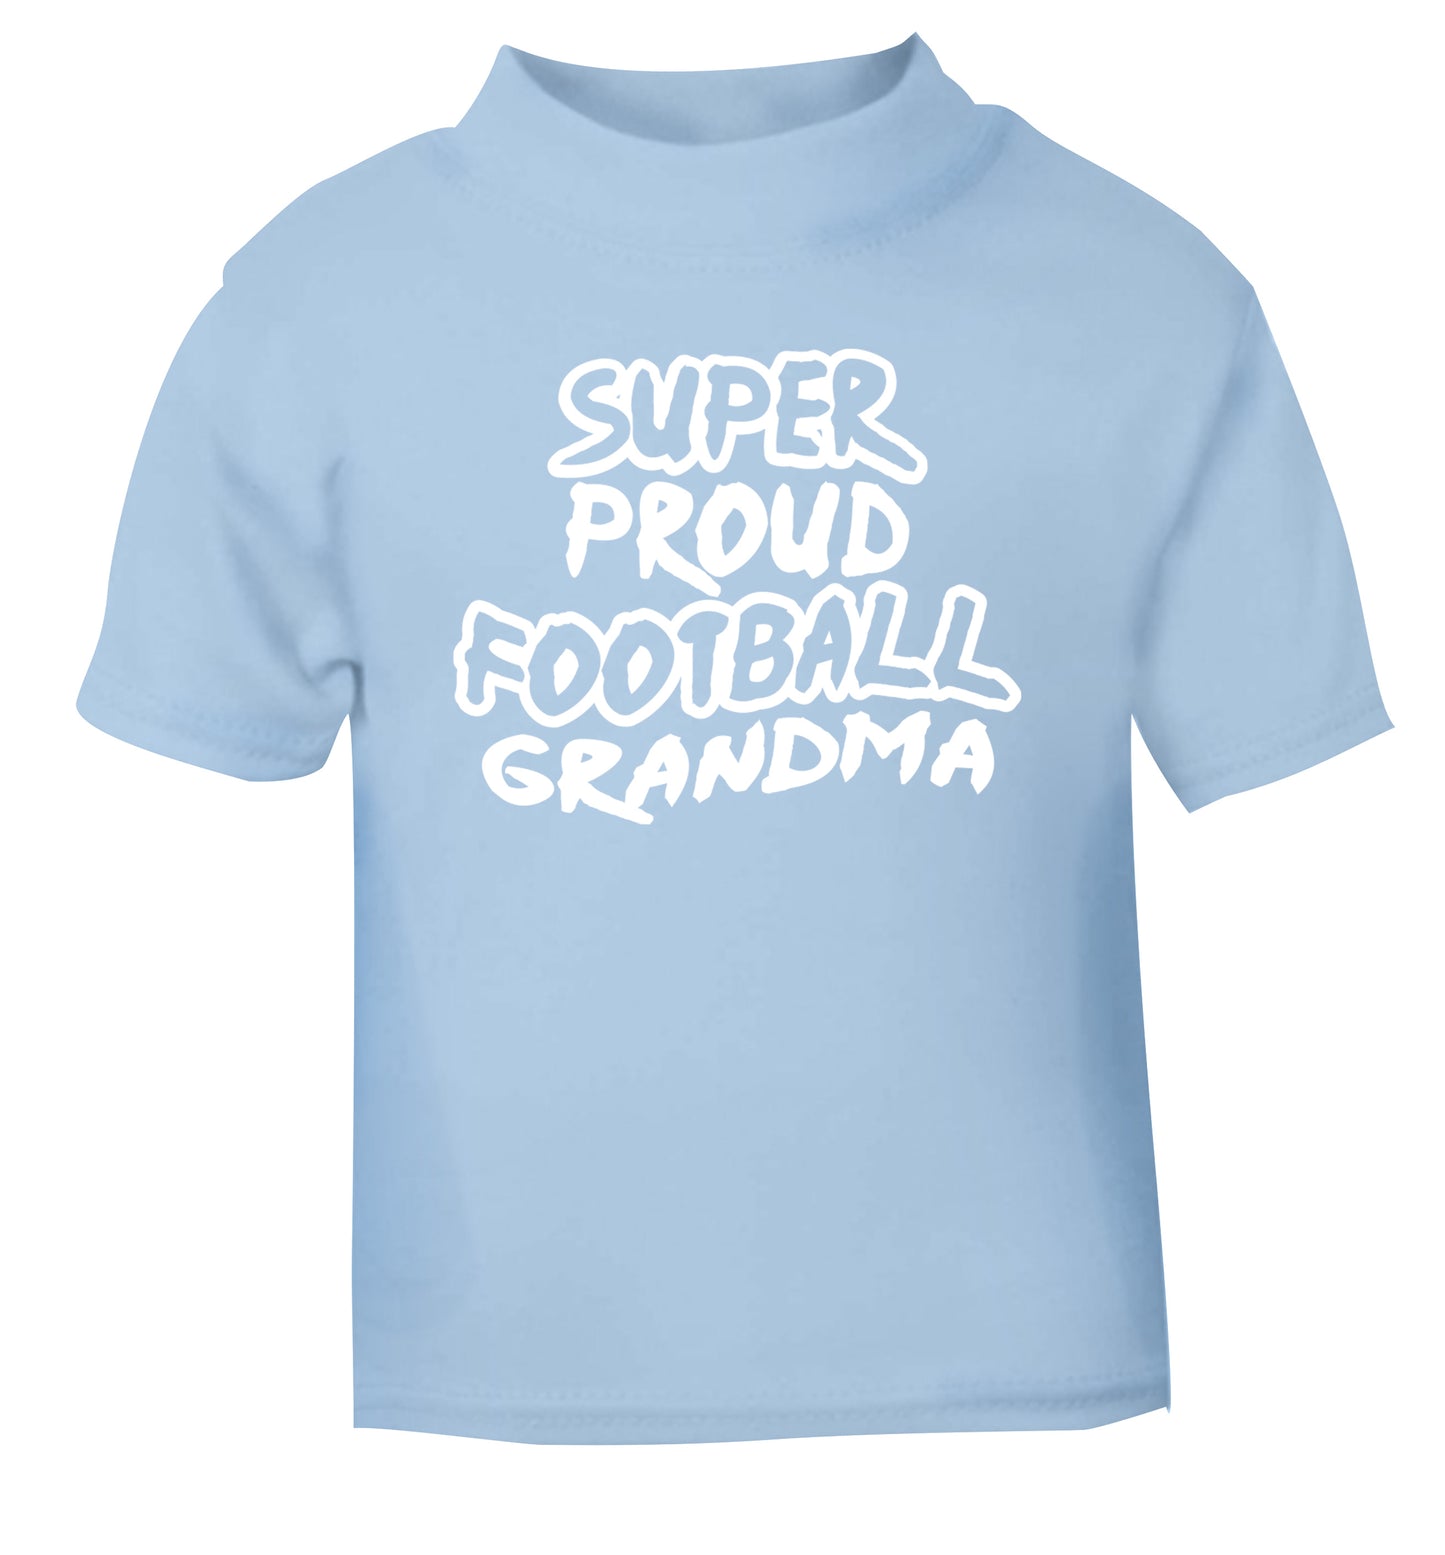 Super proud football grandma light blue Baby Toddler Tshirt 2 Years